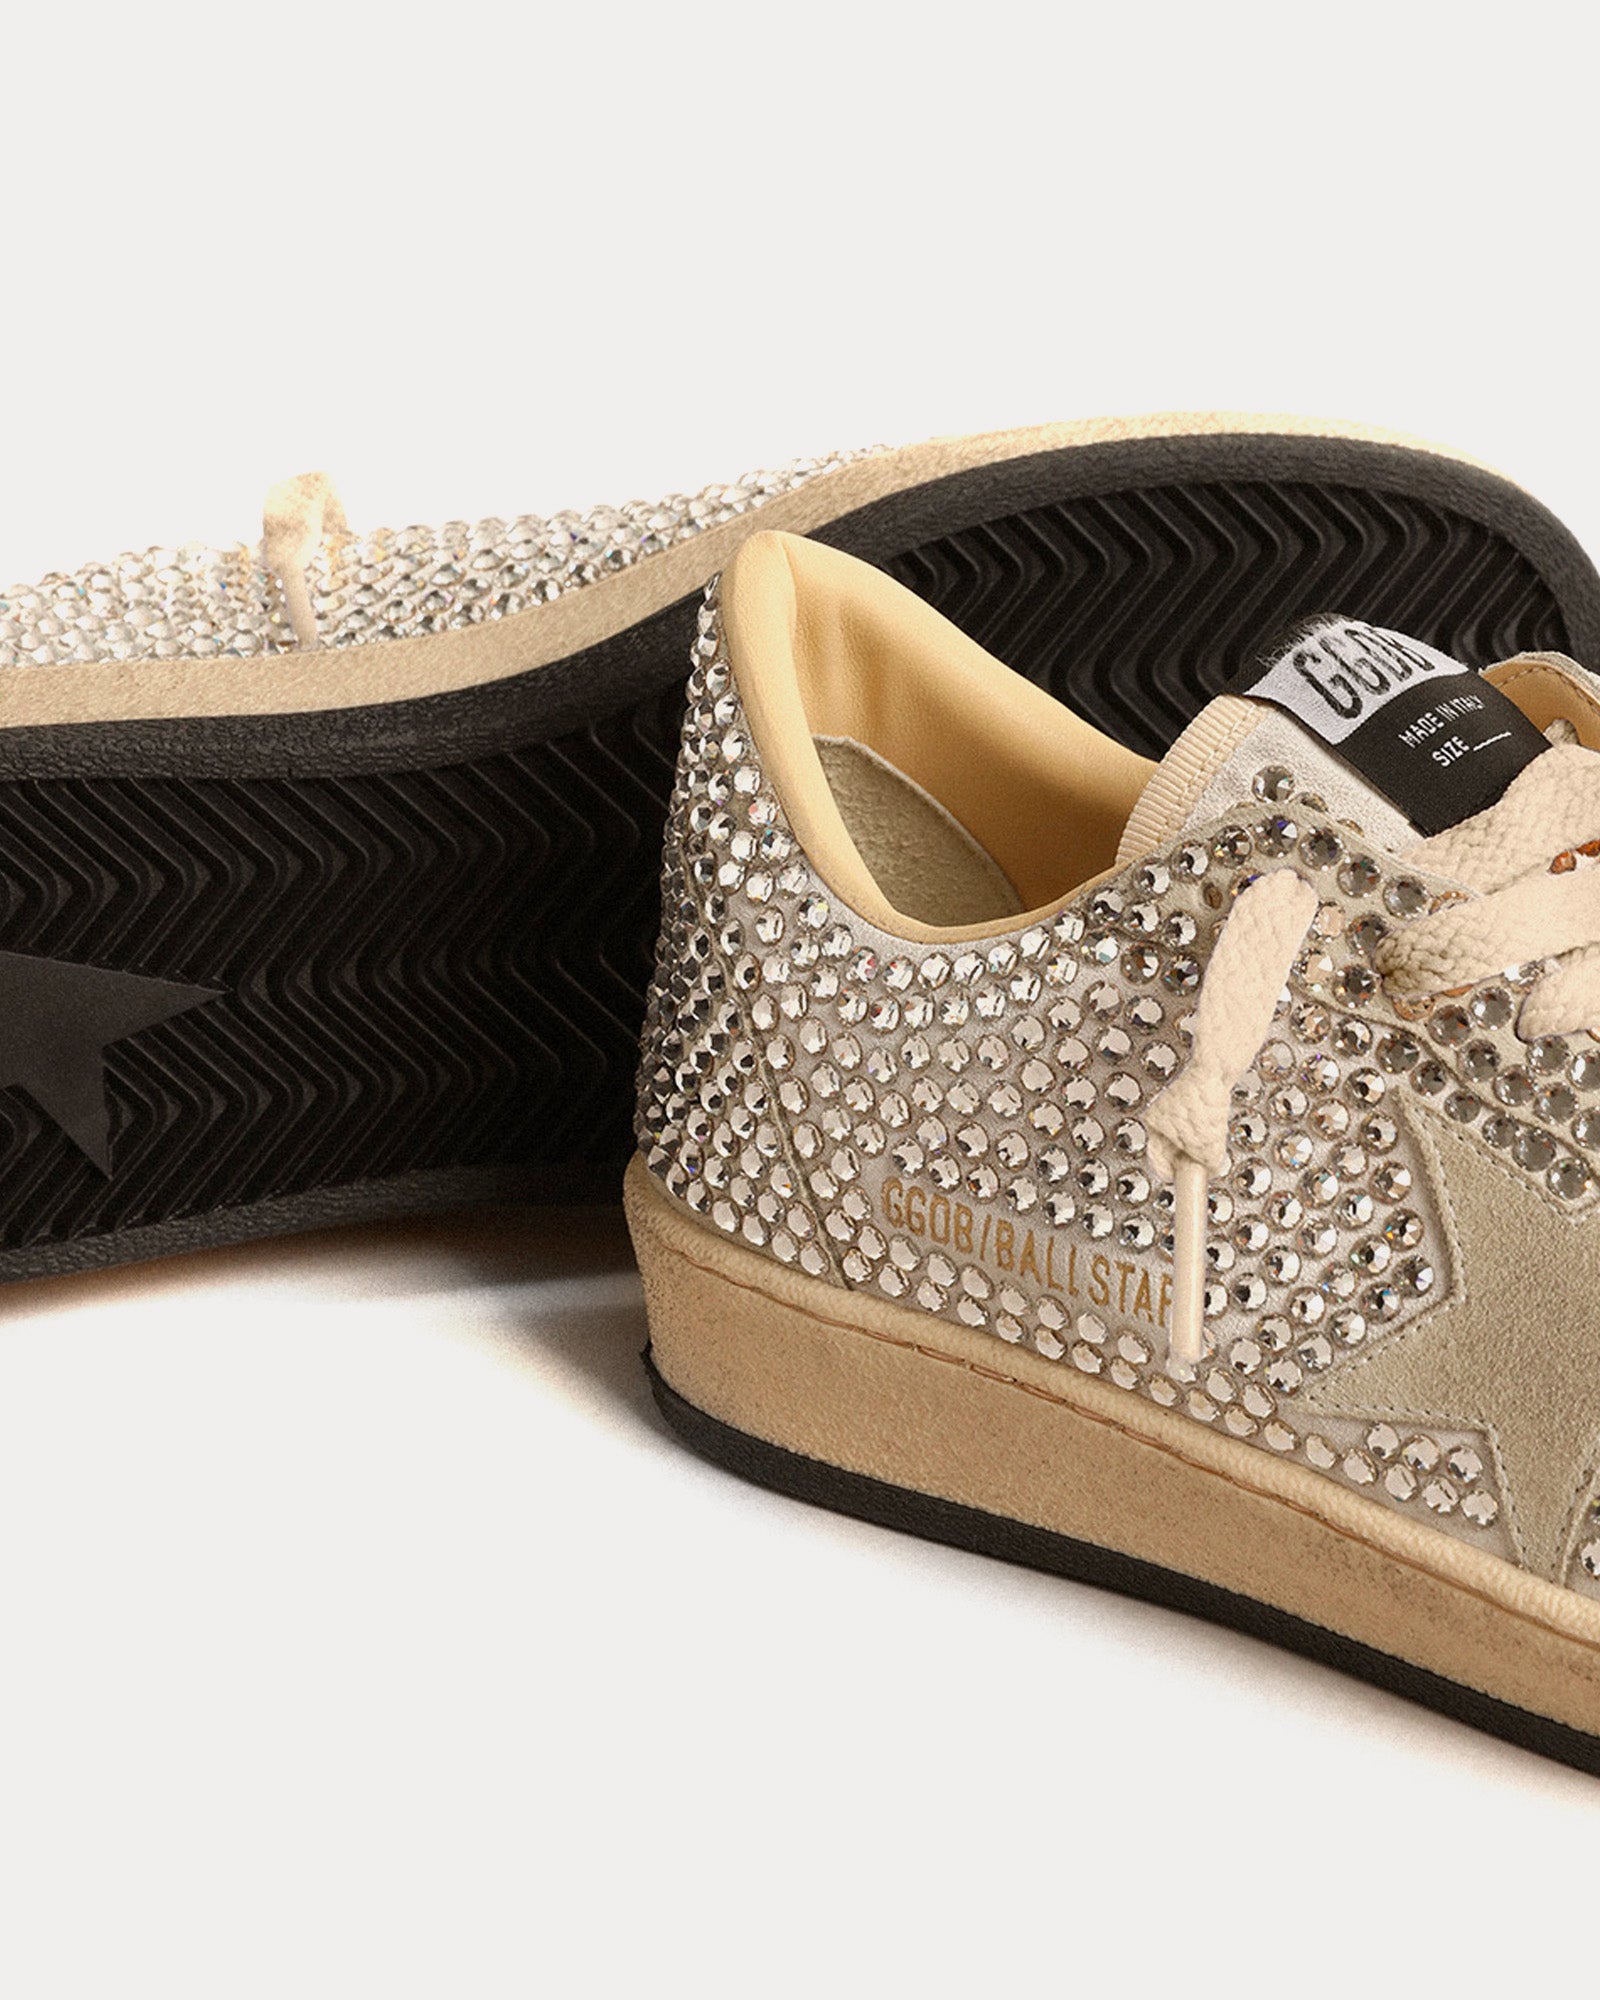 Golden Goose - Ball Star LTD with Swarvoski Crystal & Suede Star Grey Low Top Sneakers